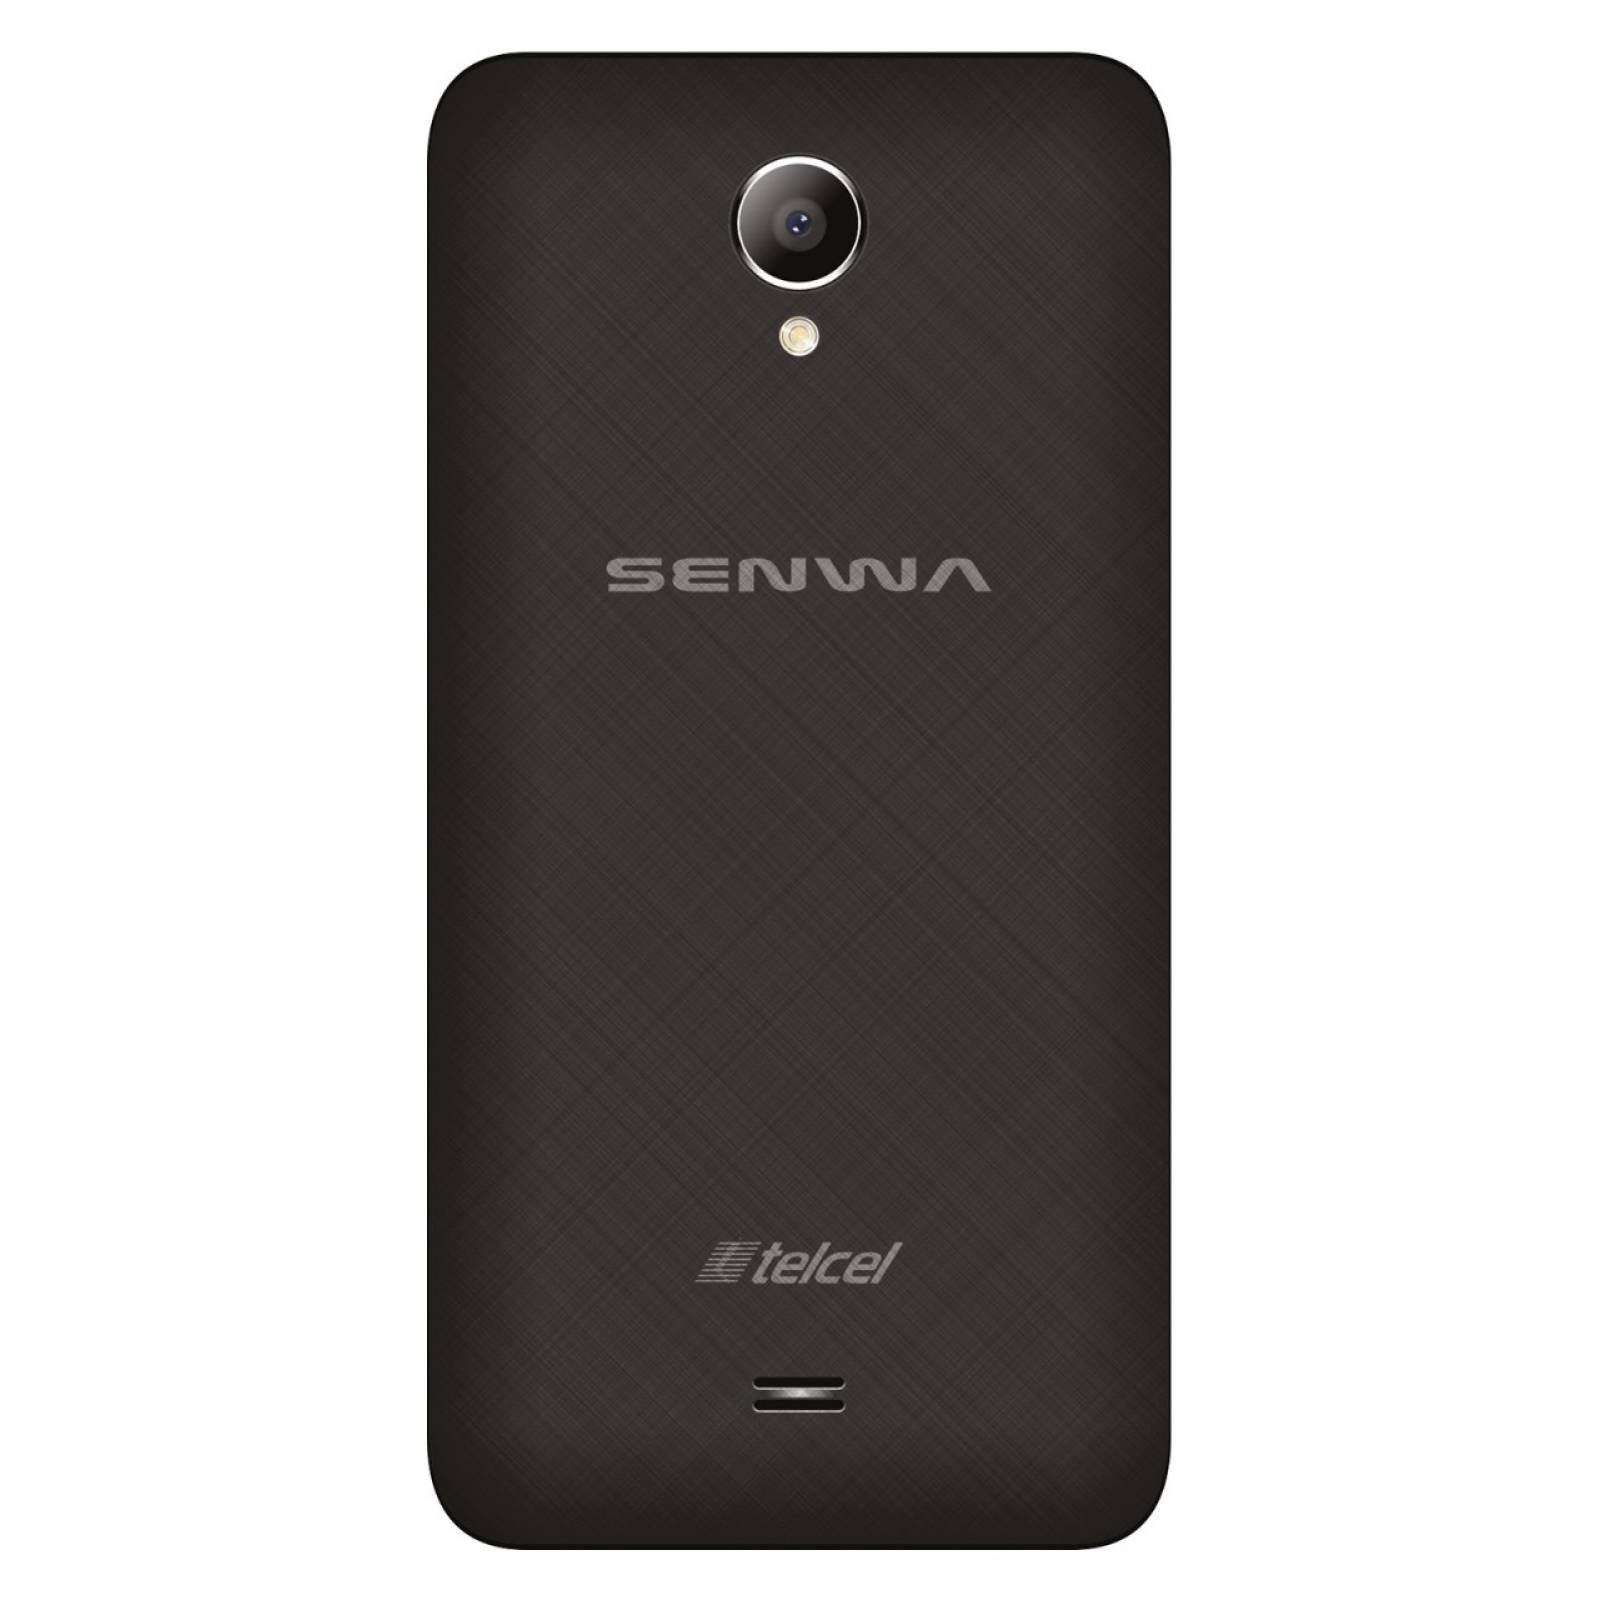 Celular SENWA LTE LS50 PEGASUS Color NEGRO Telcel más Power Bank de regalo